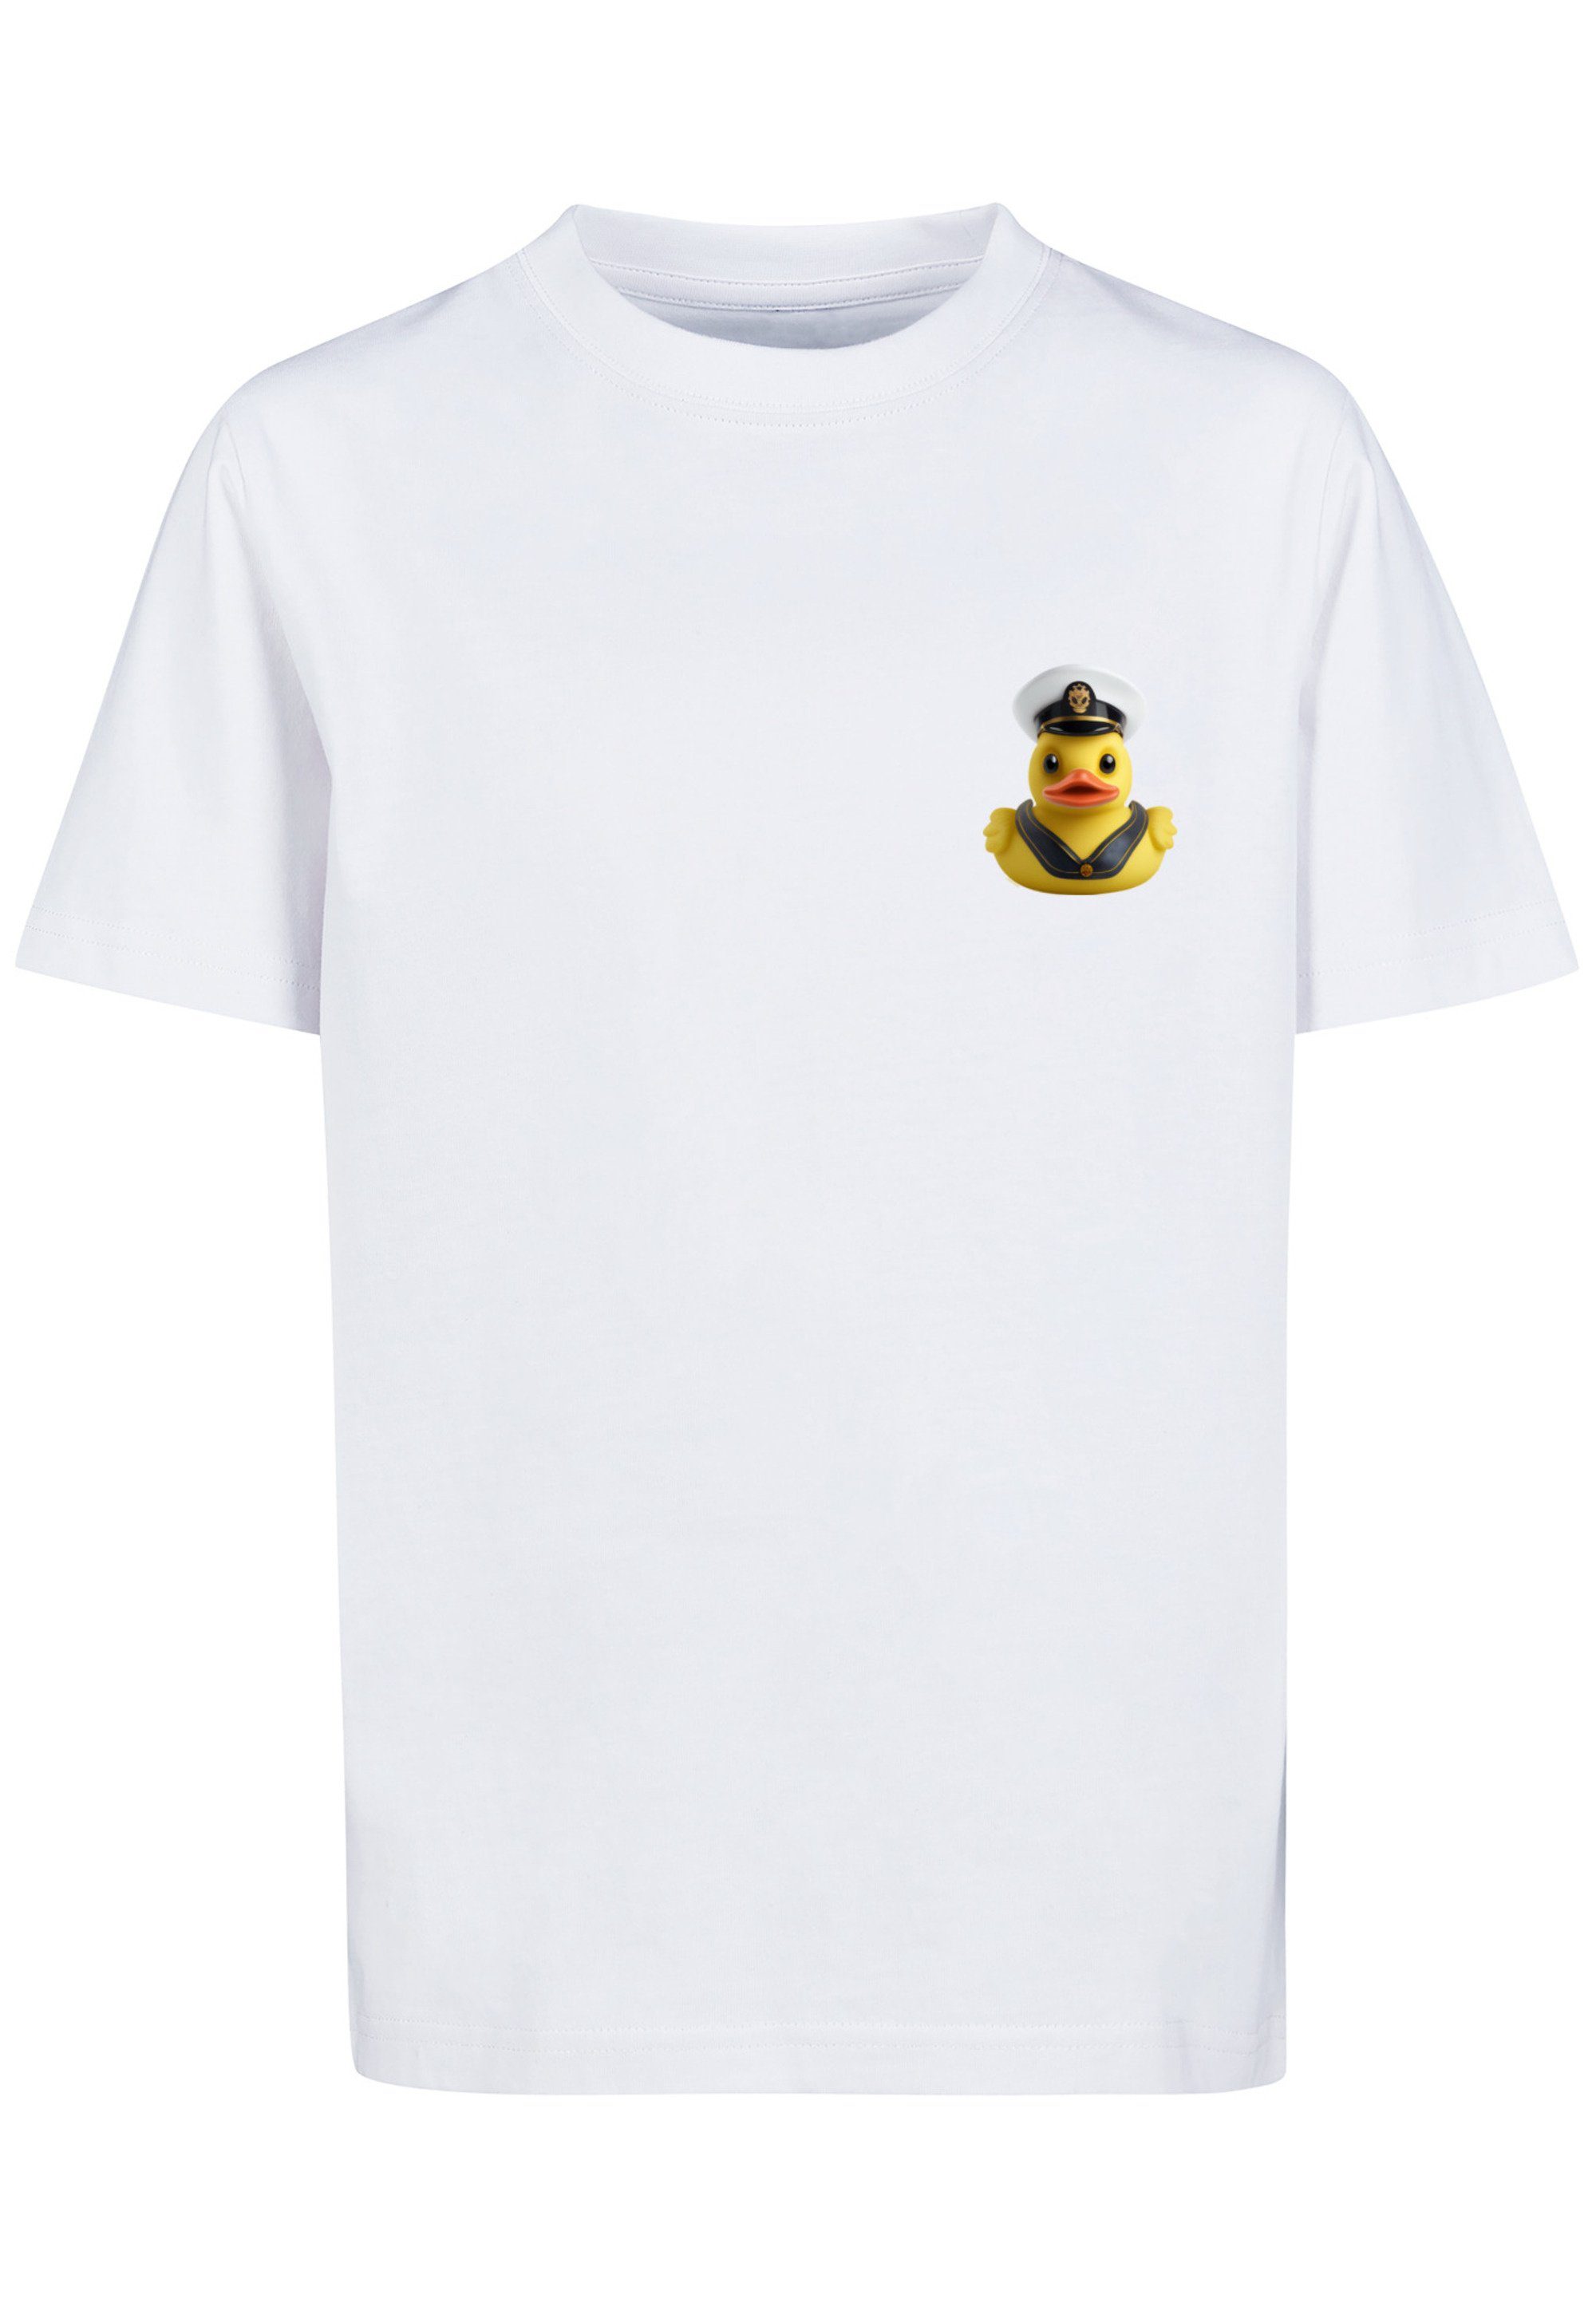 F4NT4STIC T-Shirt Captain weiß Duck Rubber UNISEX TEE Print